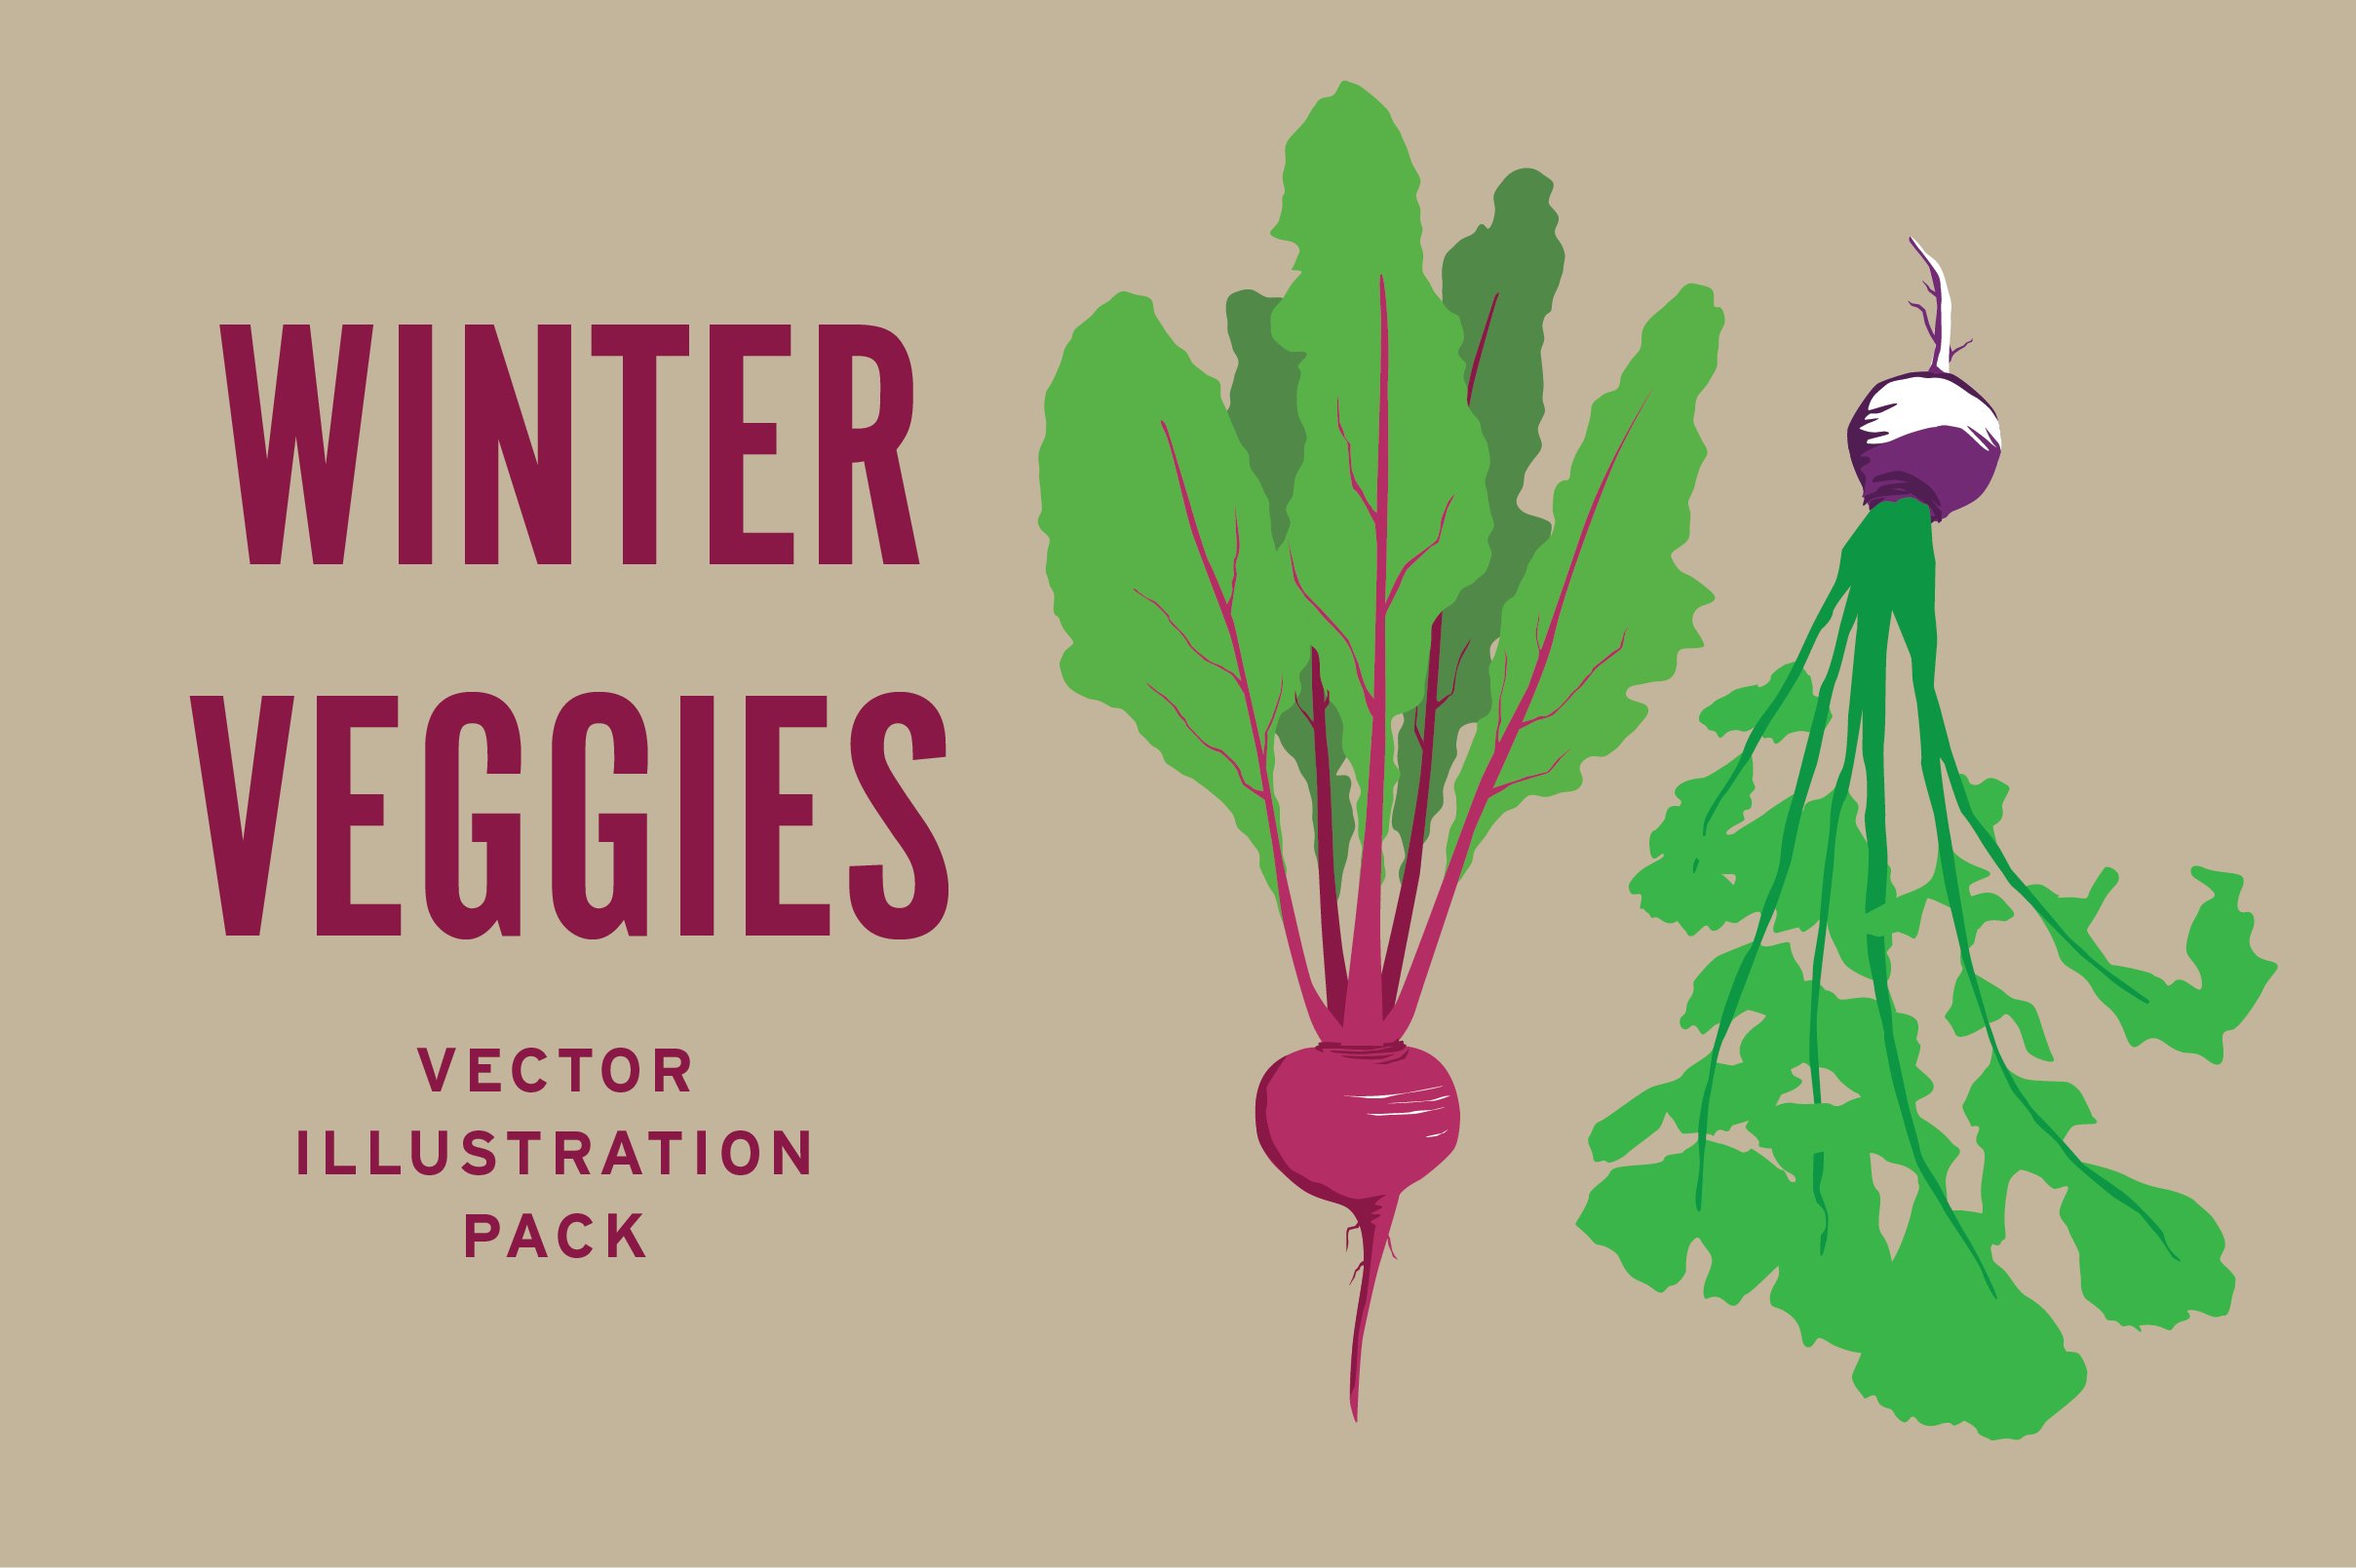 Winter veggies illustrations.